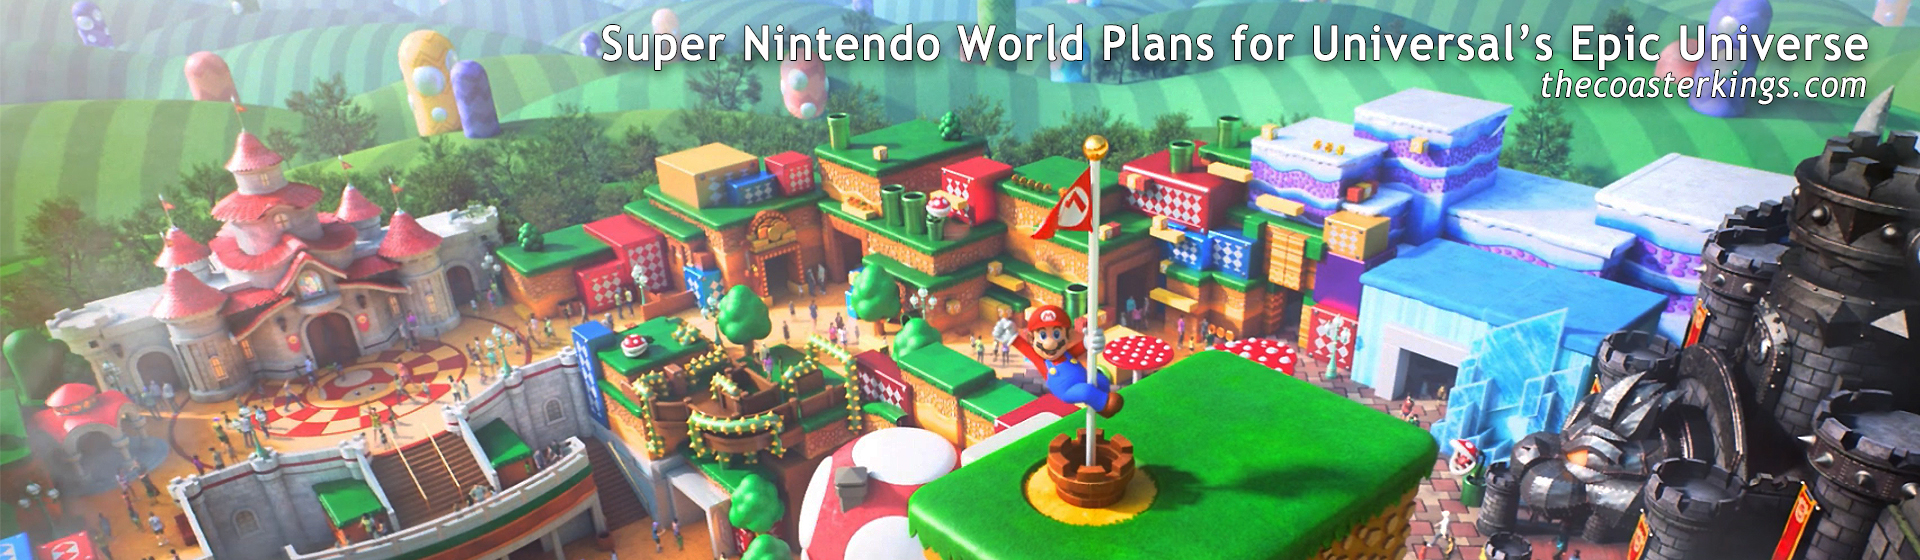 Epic Universe Super Nintendo World Featured Image